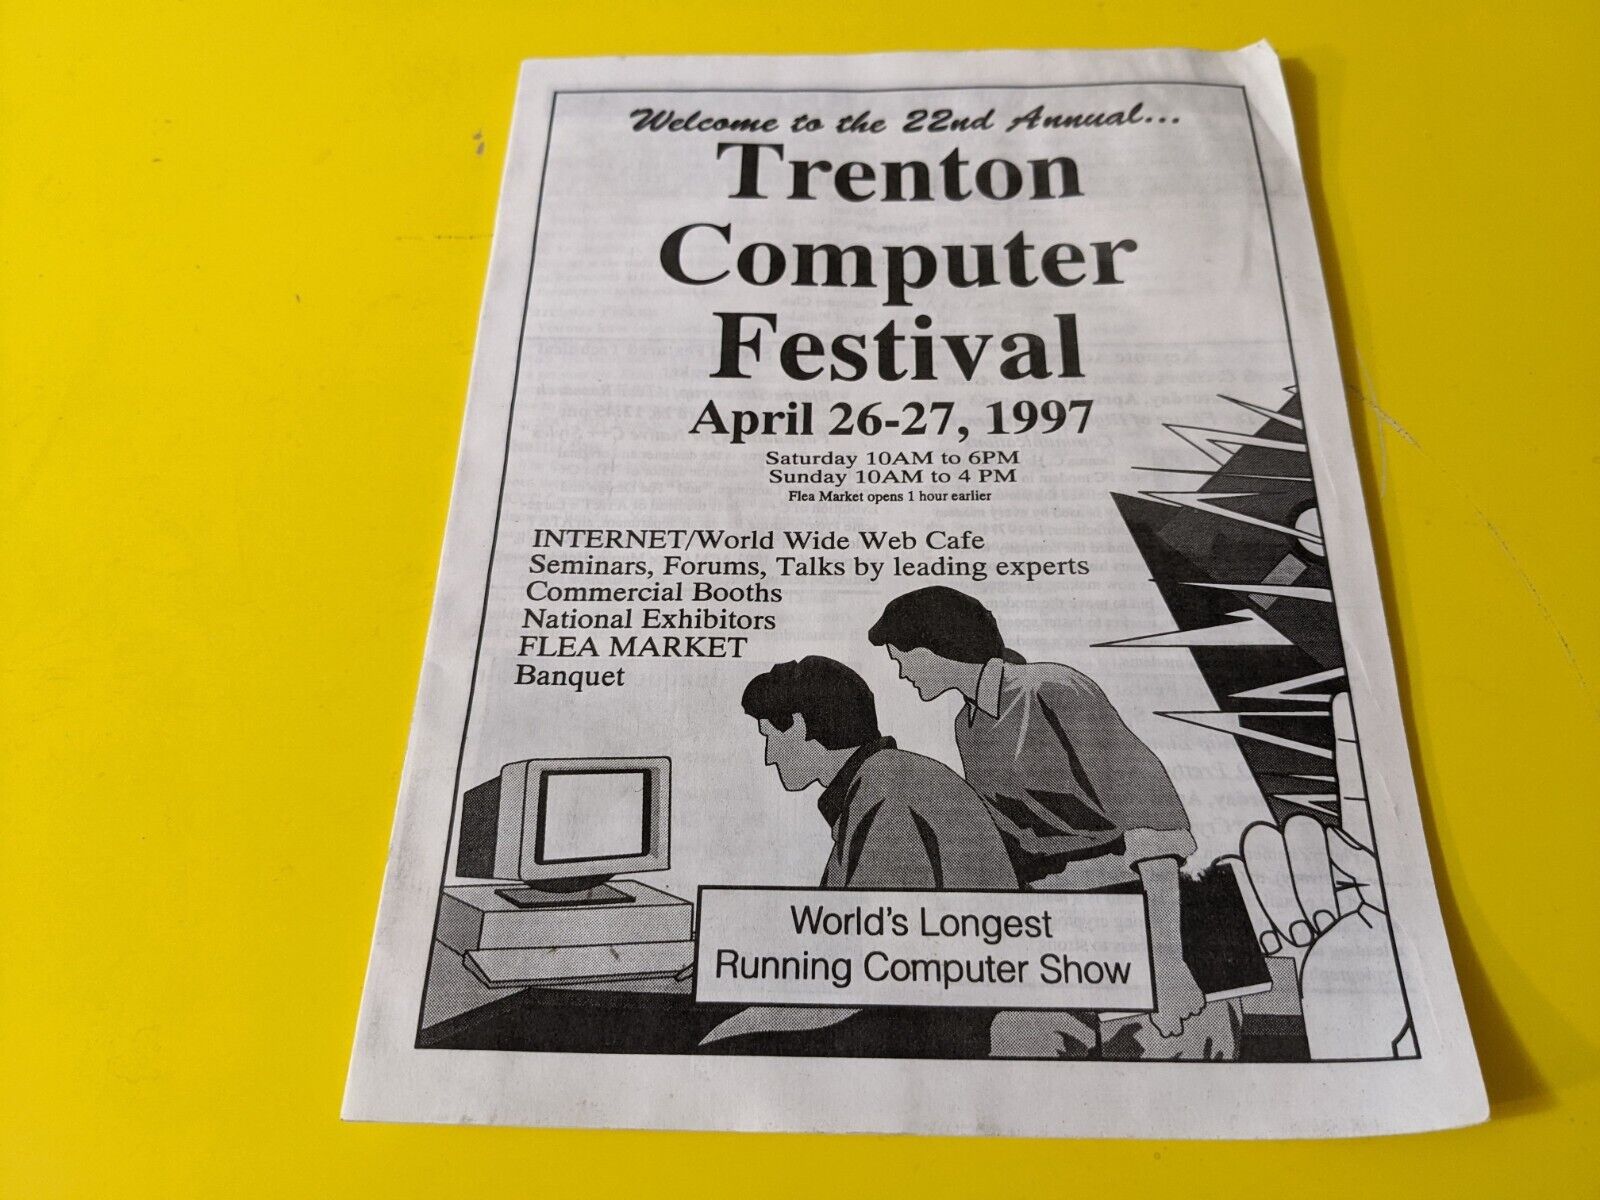 Vintage 22nd Annual Trenton Computer Festival 1997 Program Guide Book